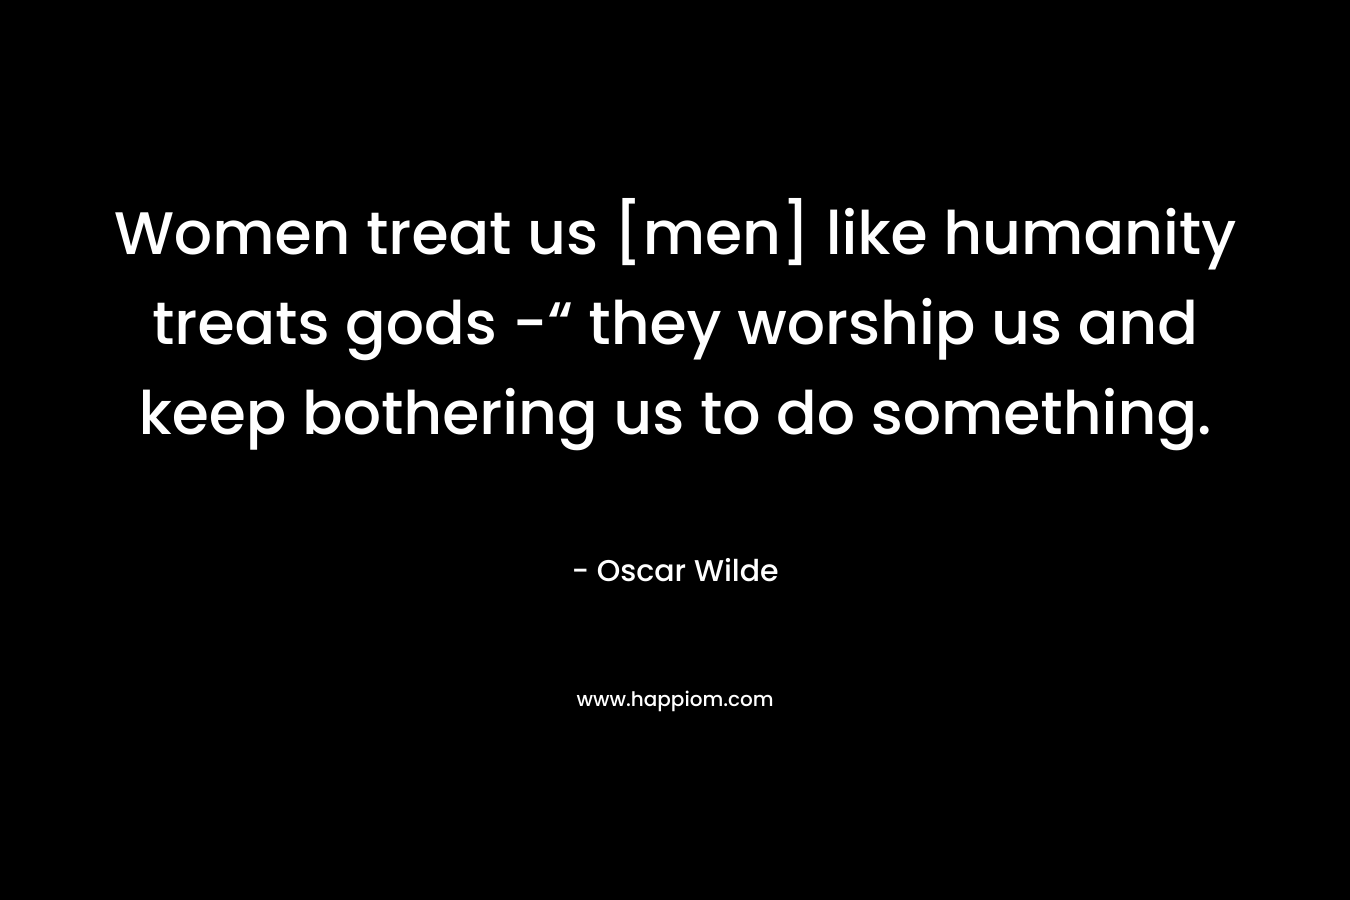 Women treat us [men] like humanity treats gods -“ they worship us and keep bothering us to do something.